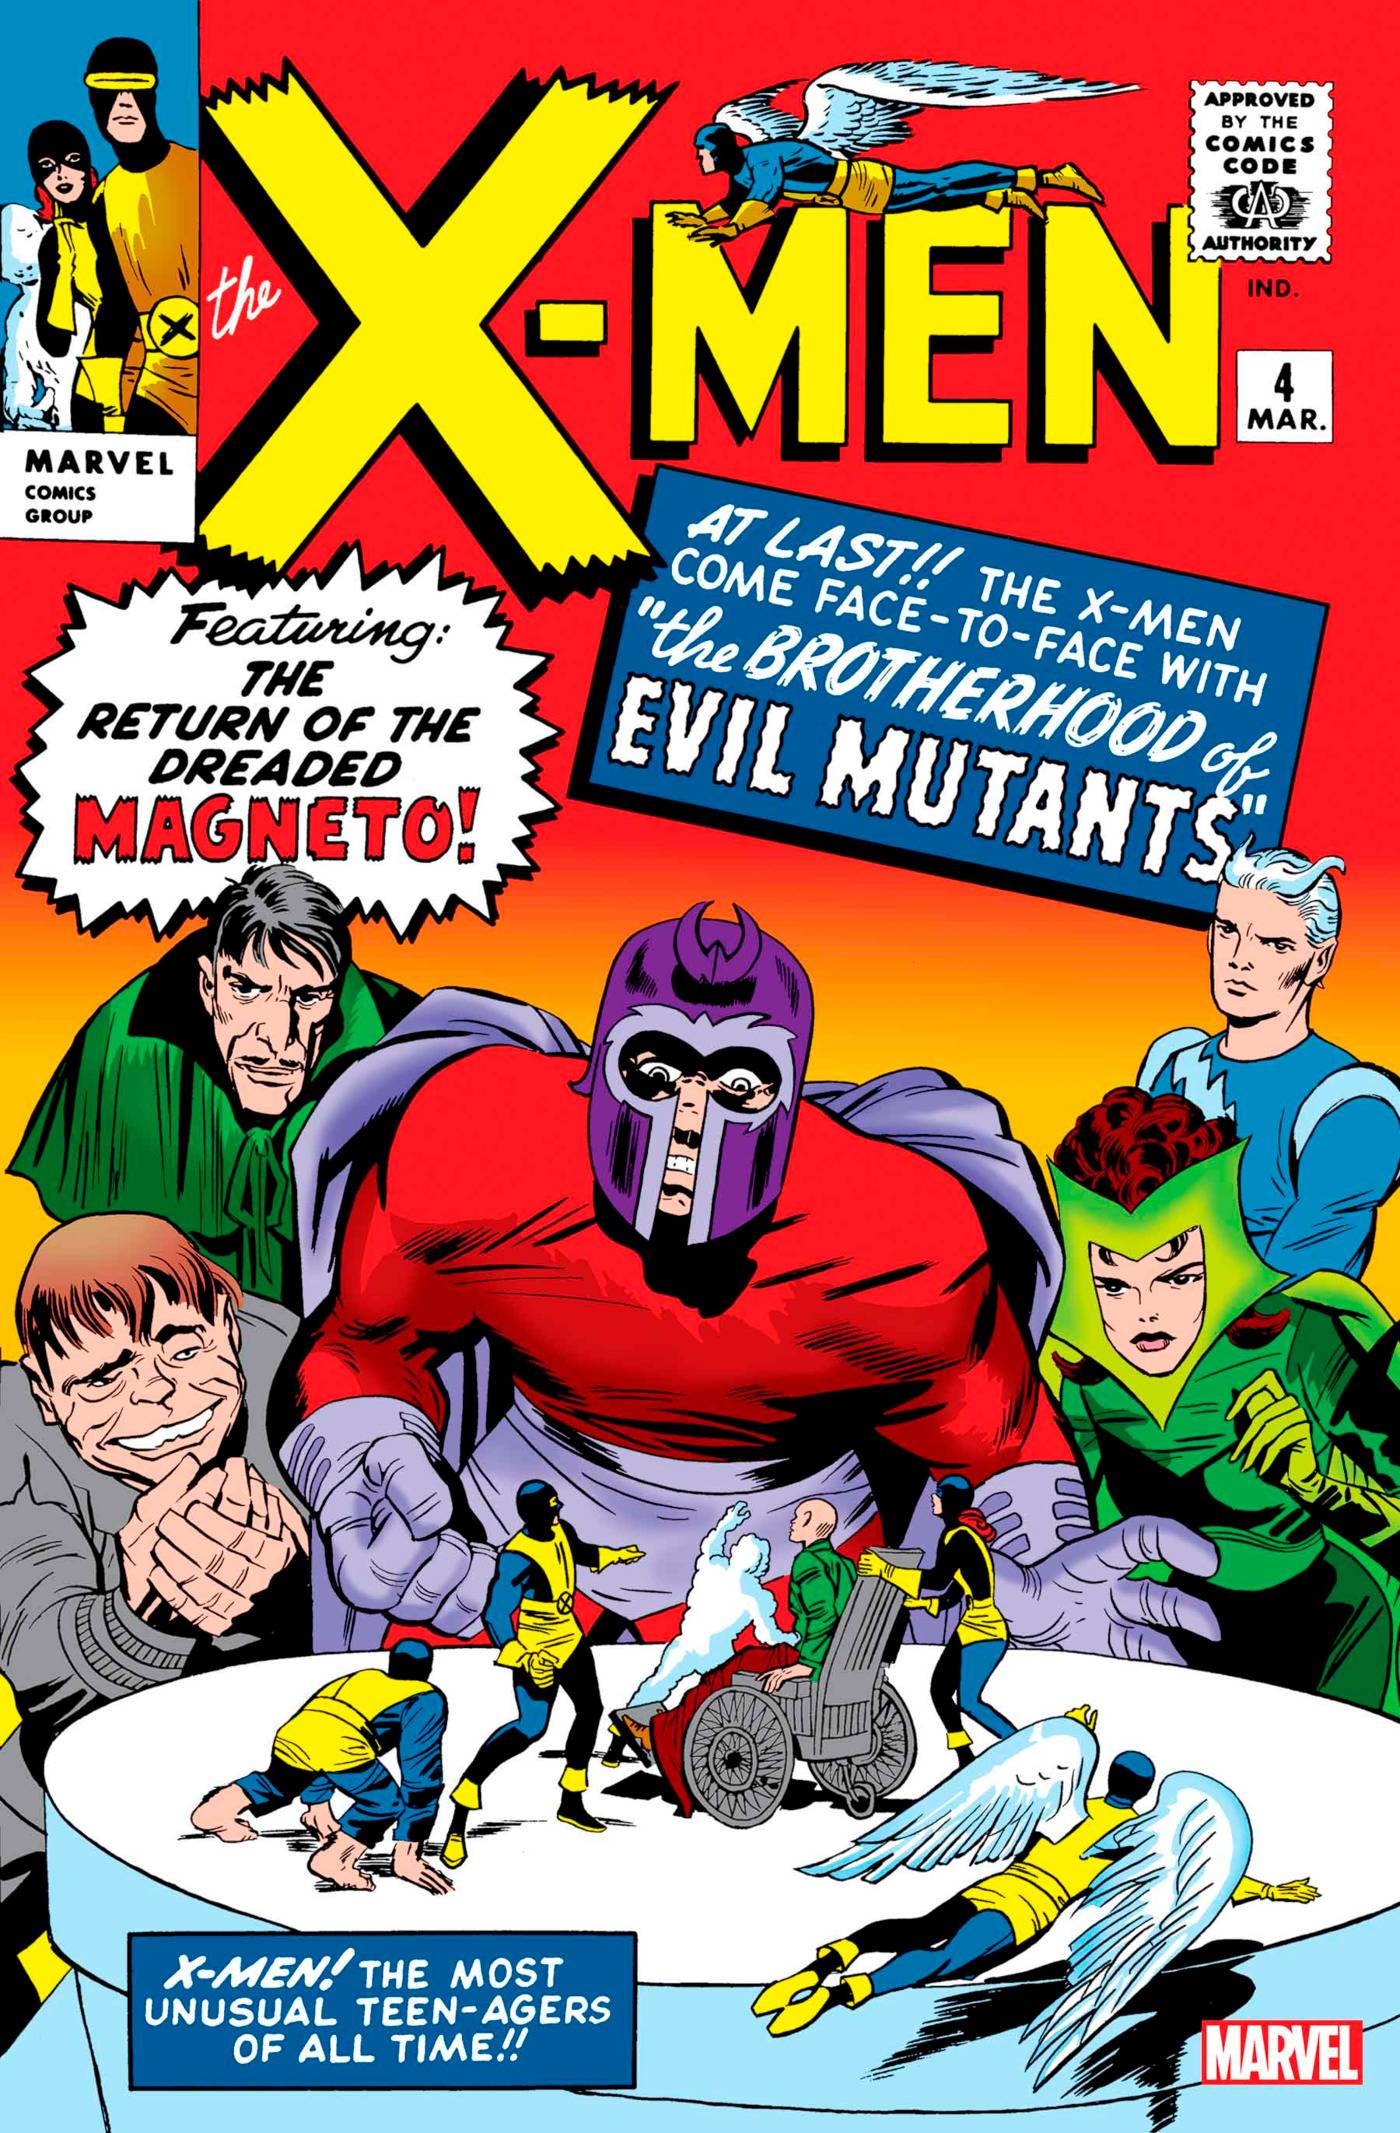 X-MEN #4 FACSIMILE EDITION NEW PTG